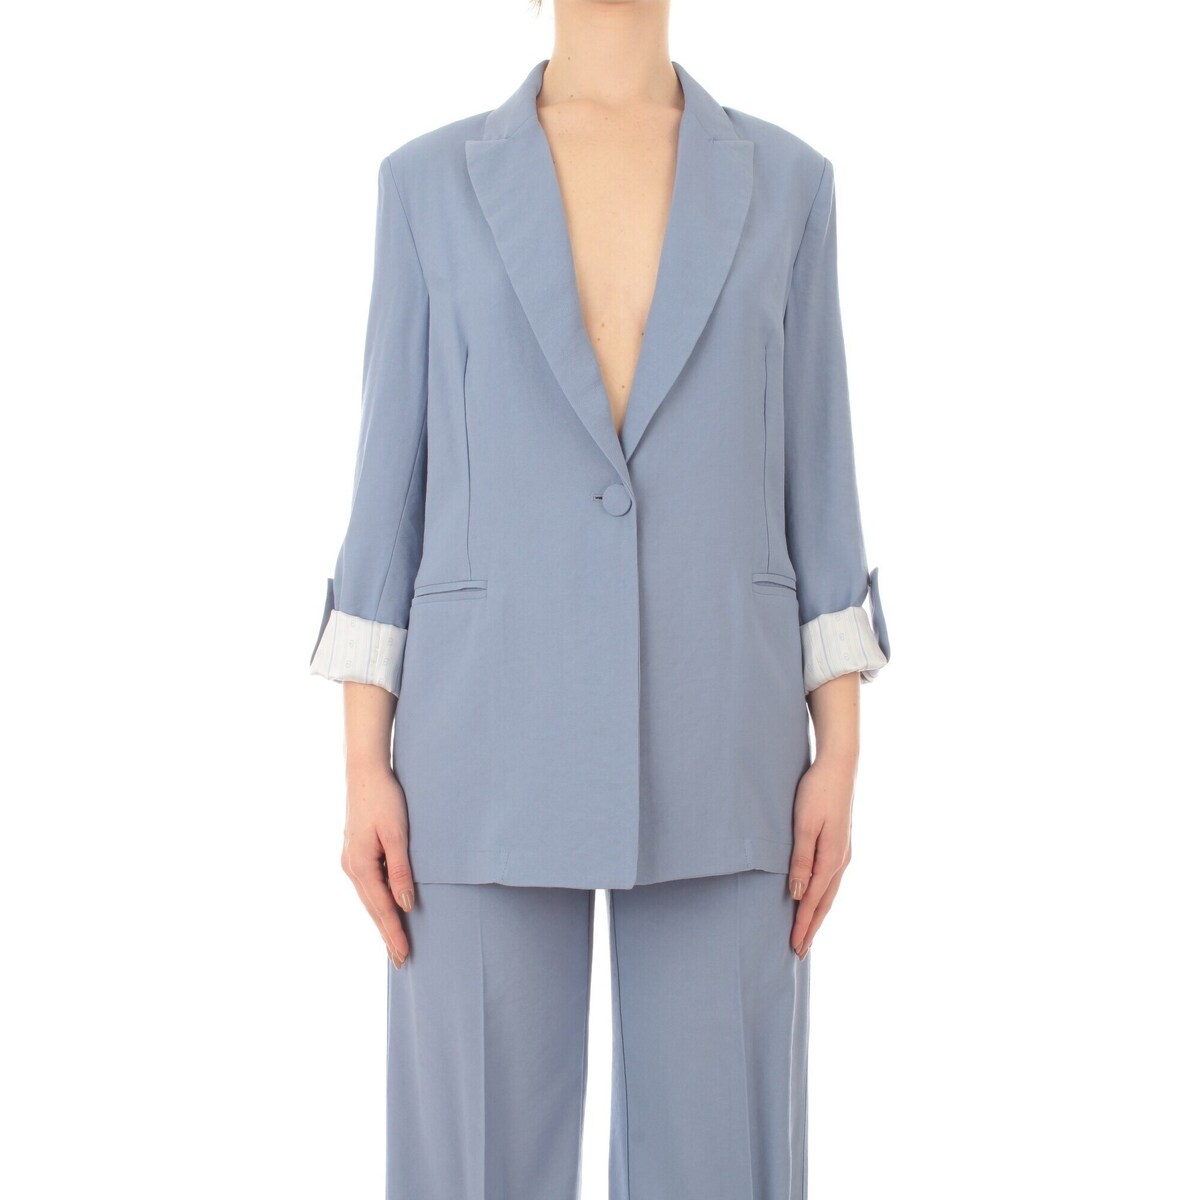 Abbigliamento Donna Giacche / Blazer Twin Set 241TF2040 Blu